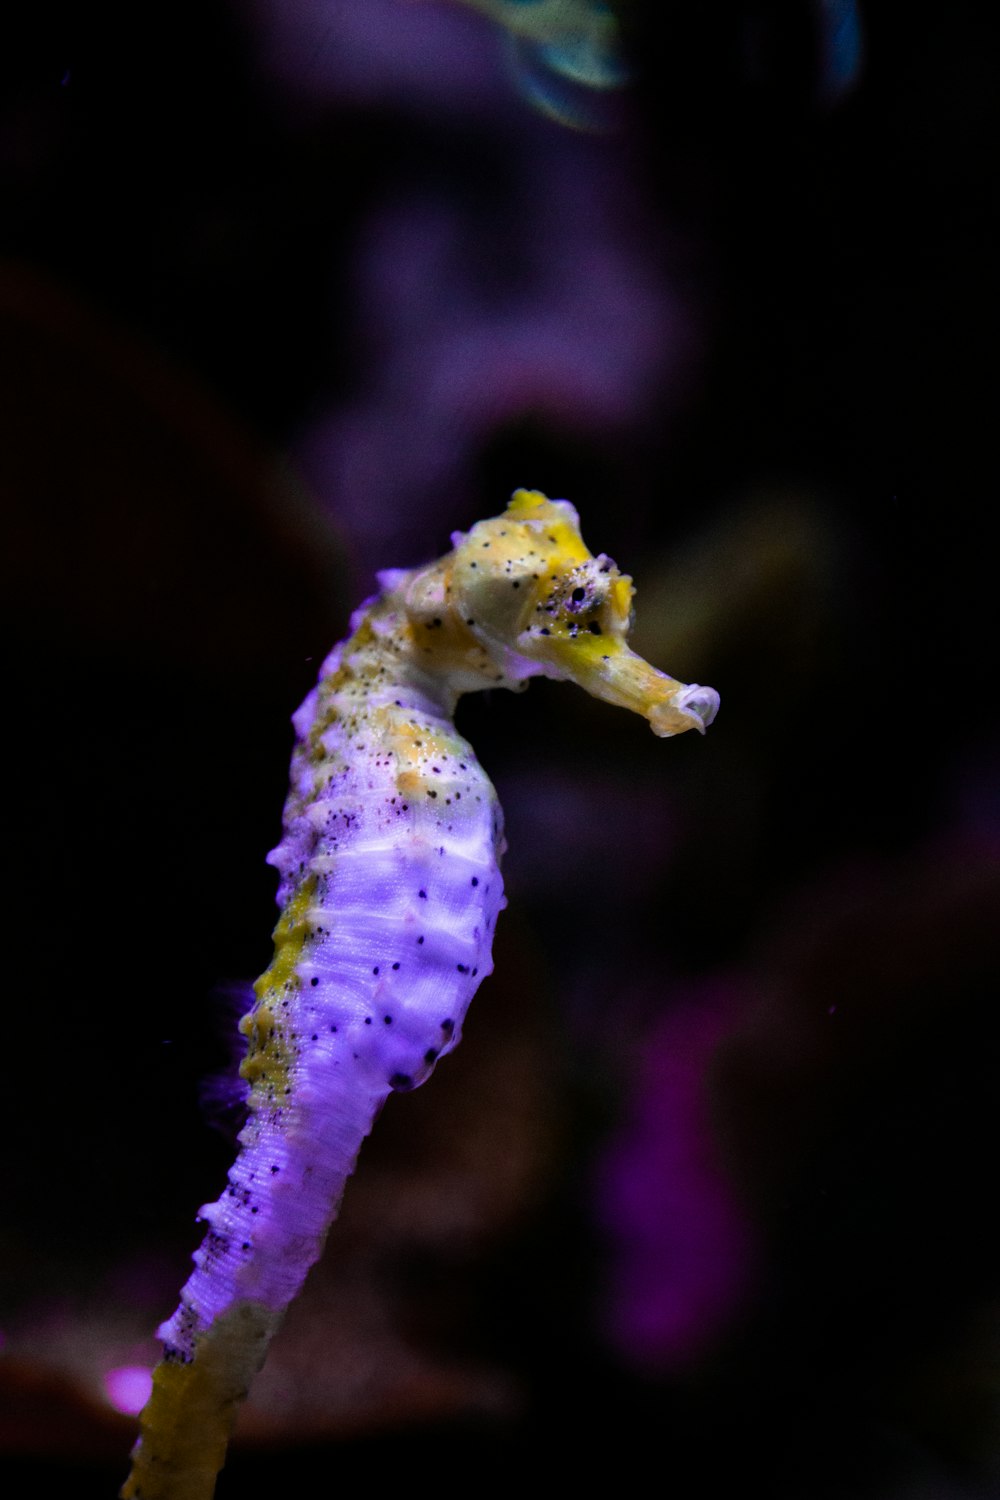 purple and white caterpillar on purple stem